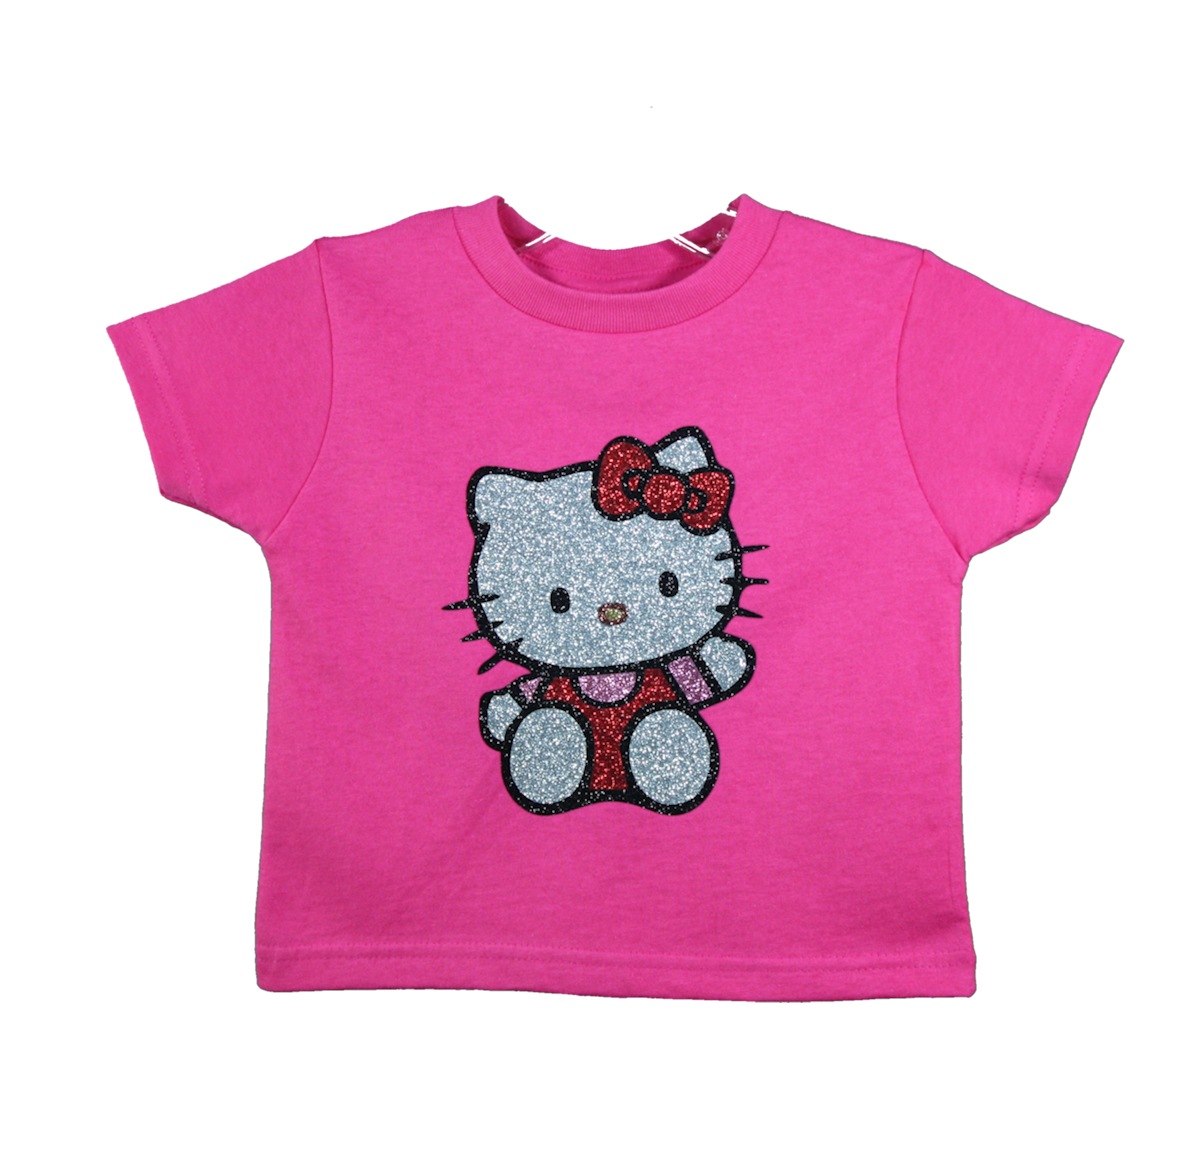 Sparkling vinyl glitter Hello Kitty t-shirt. Made on ... - Hello Kitty Clothes